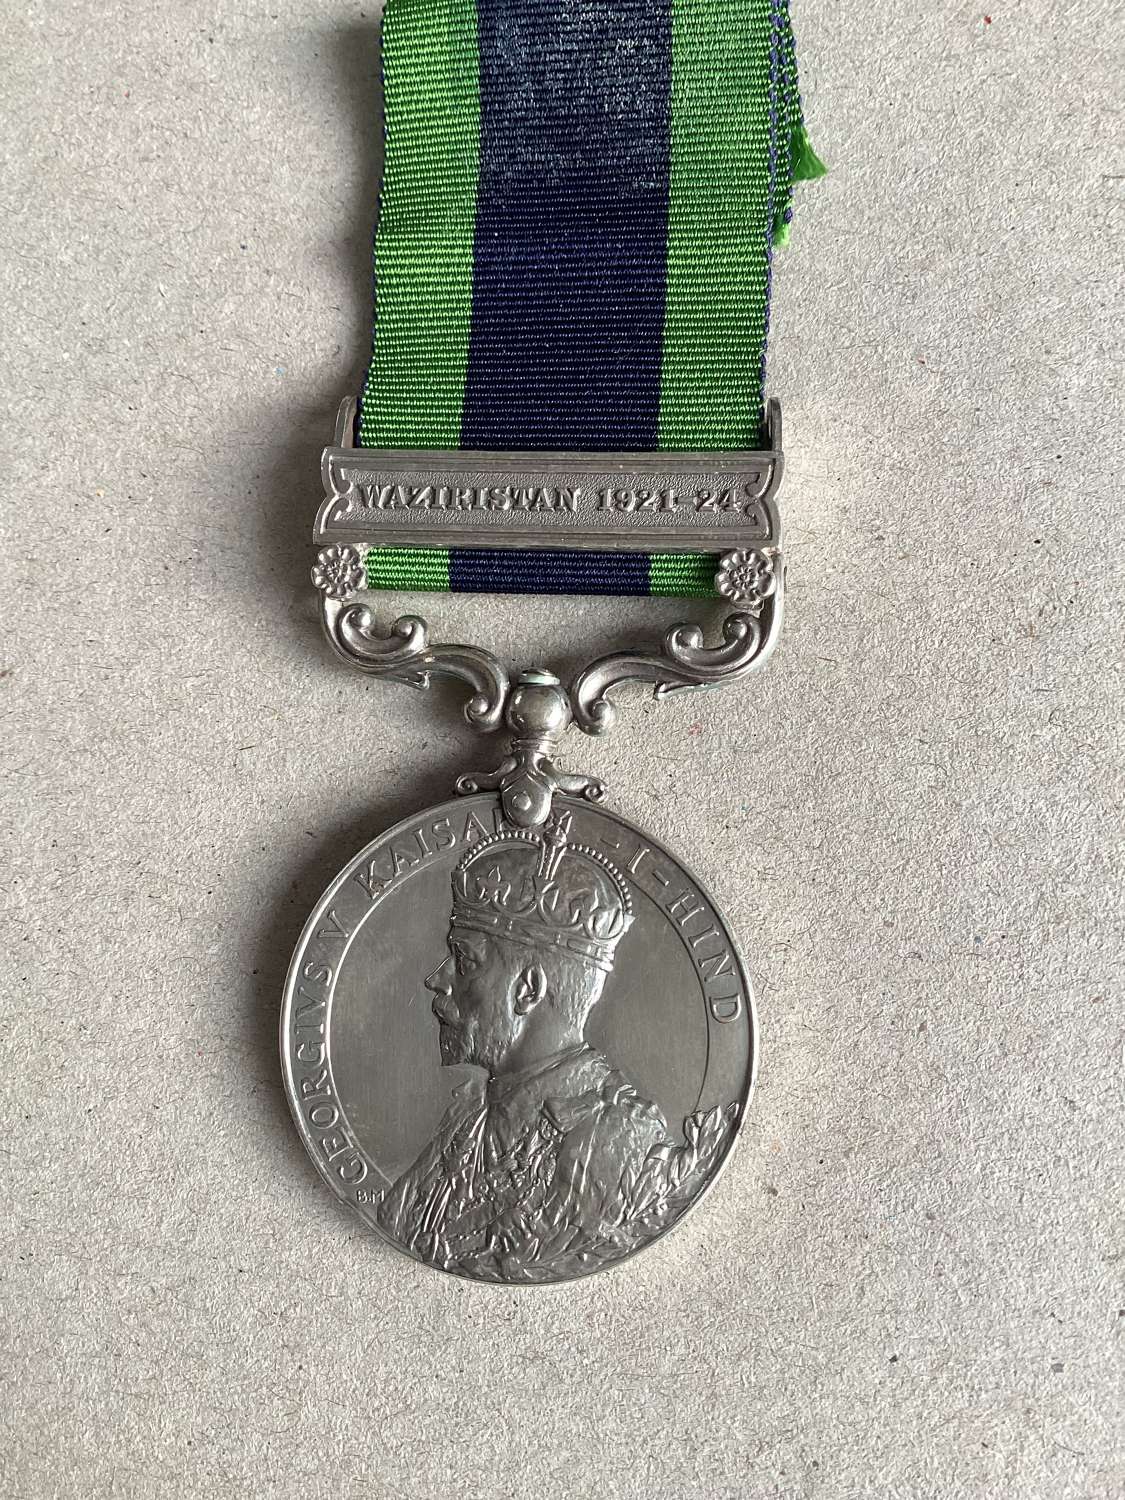 Indian General Service Medal Waziristan 1921-24